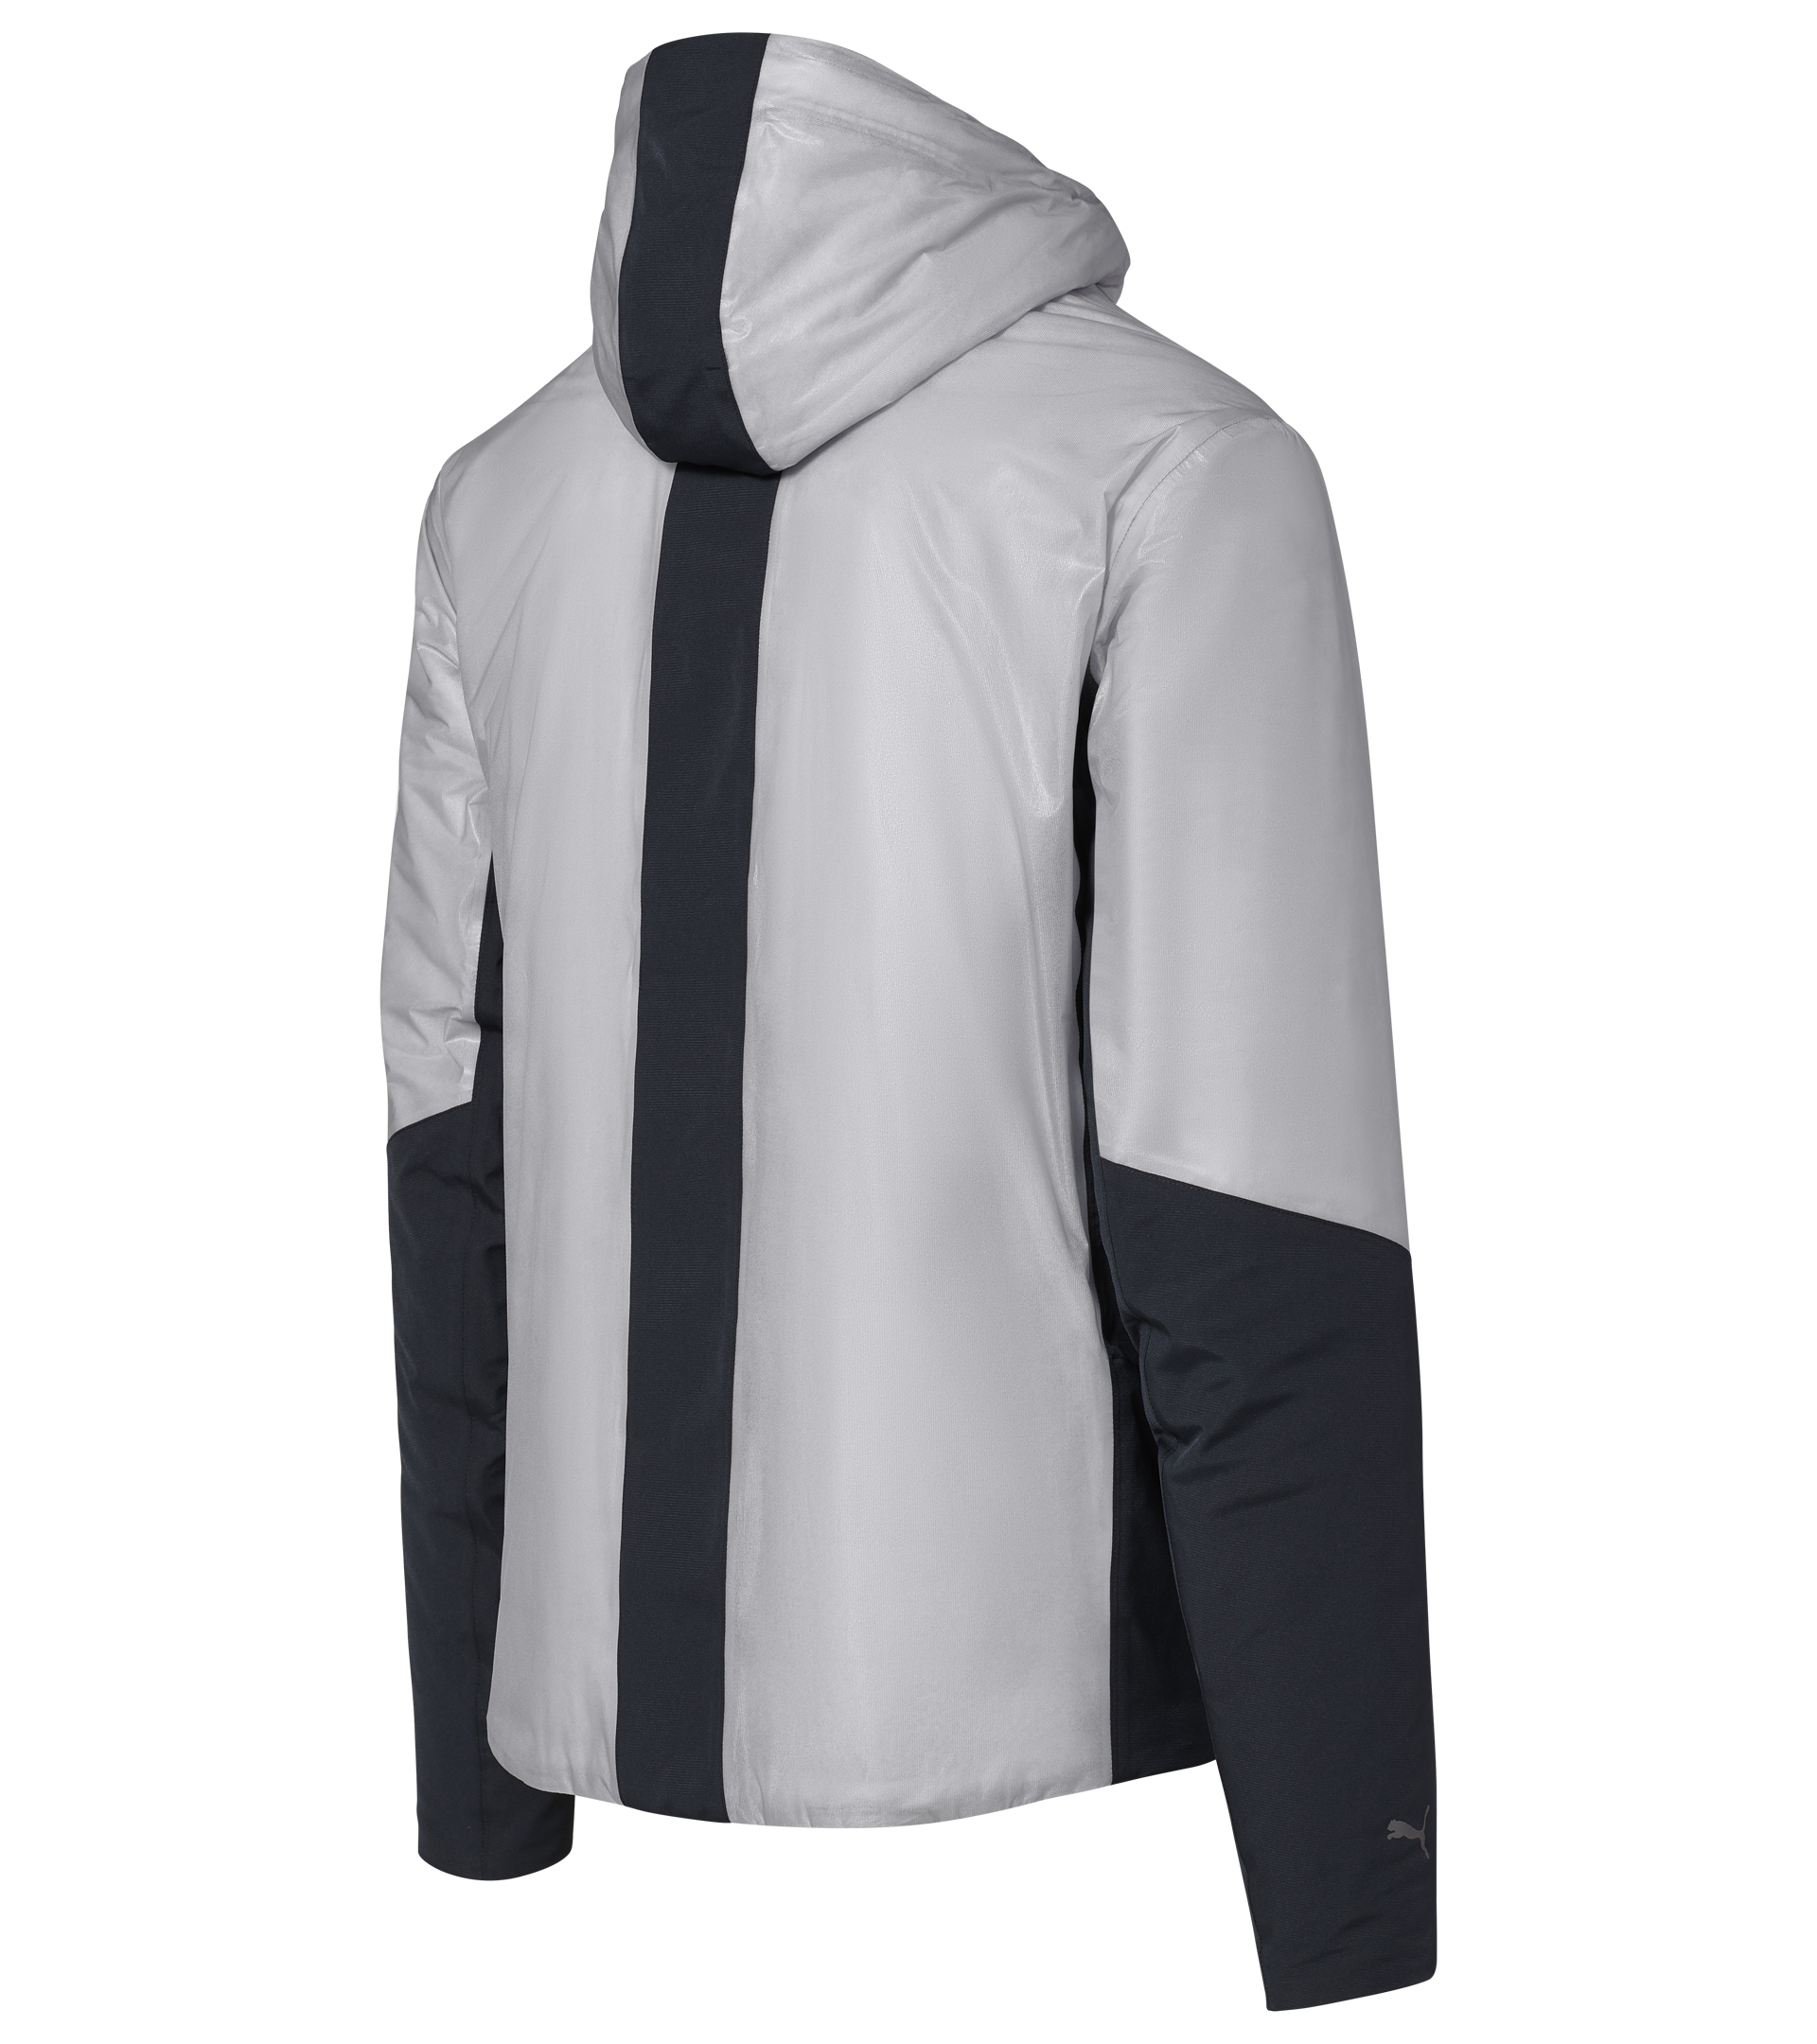 RCT Jacket - Luxury Functional Jackets for Men | Porsche Design